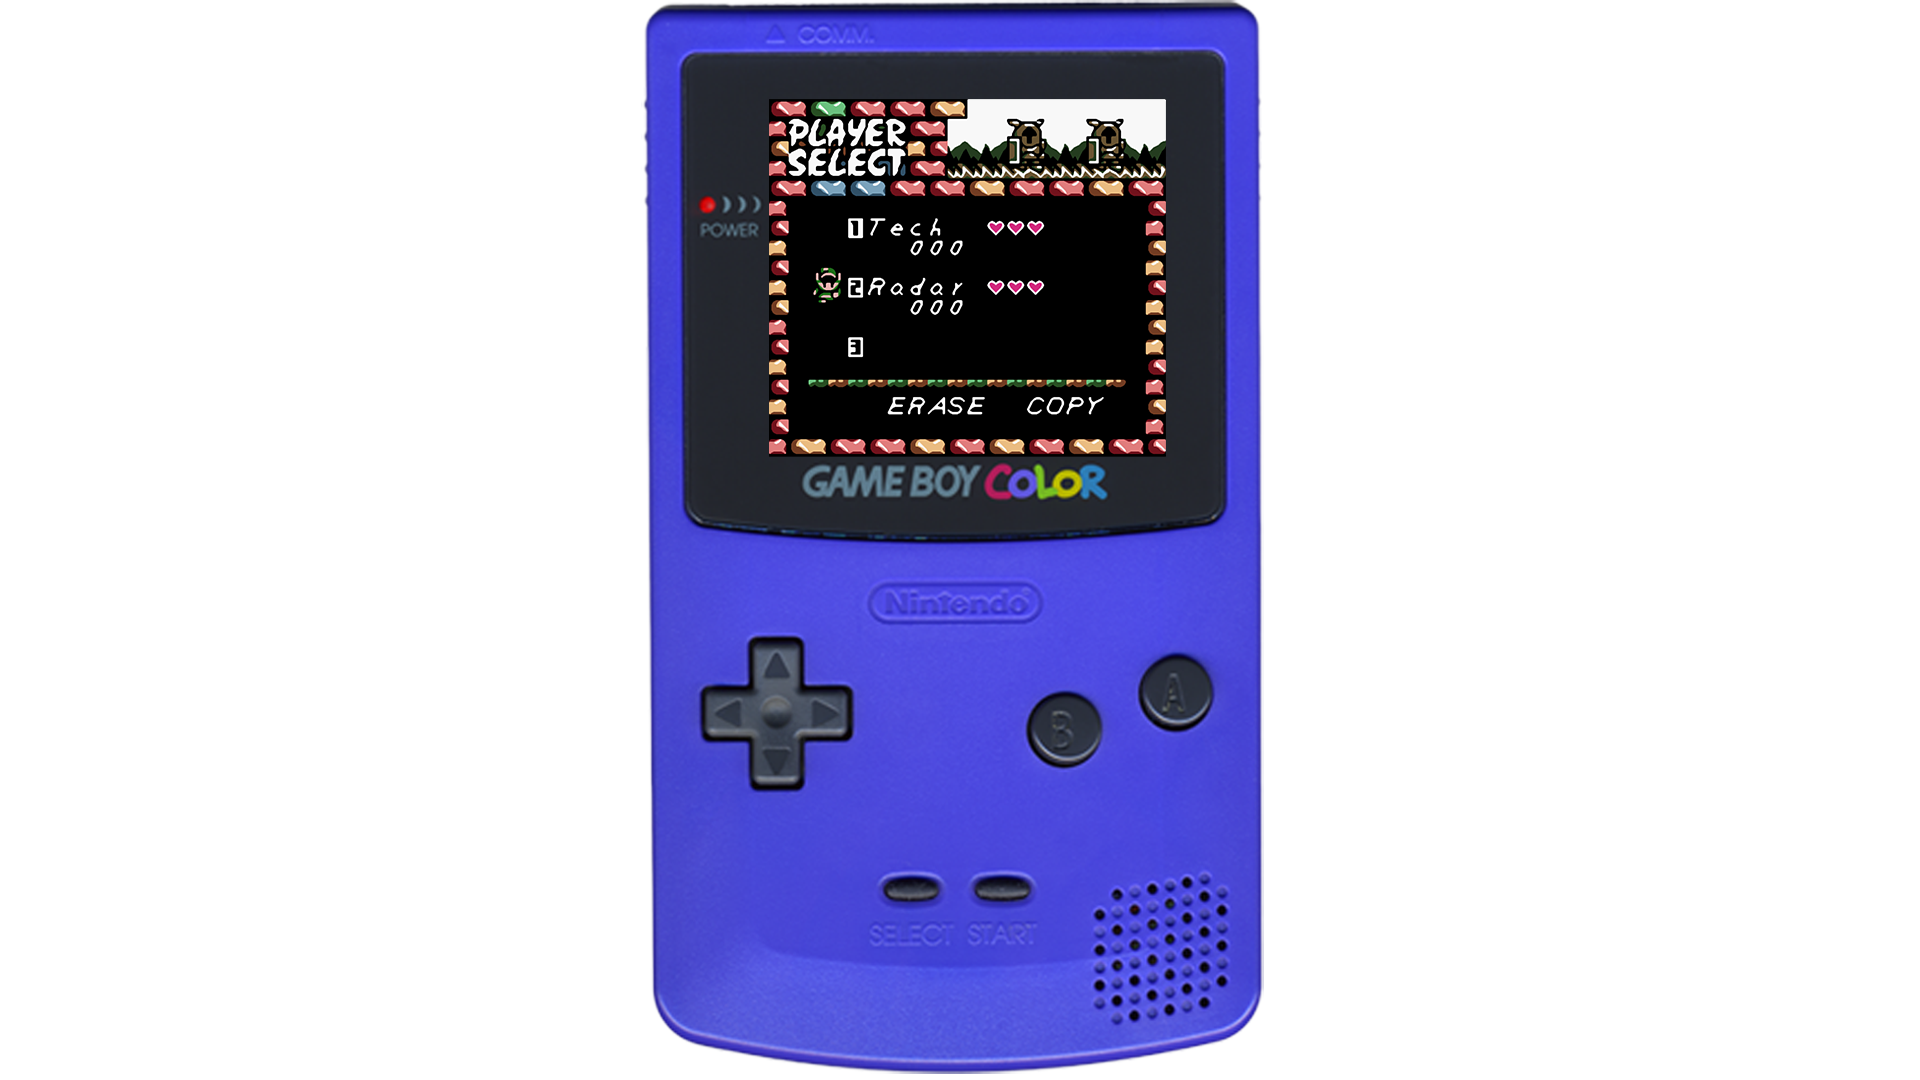 Links Awakening DX on Game Boy Color